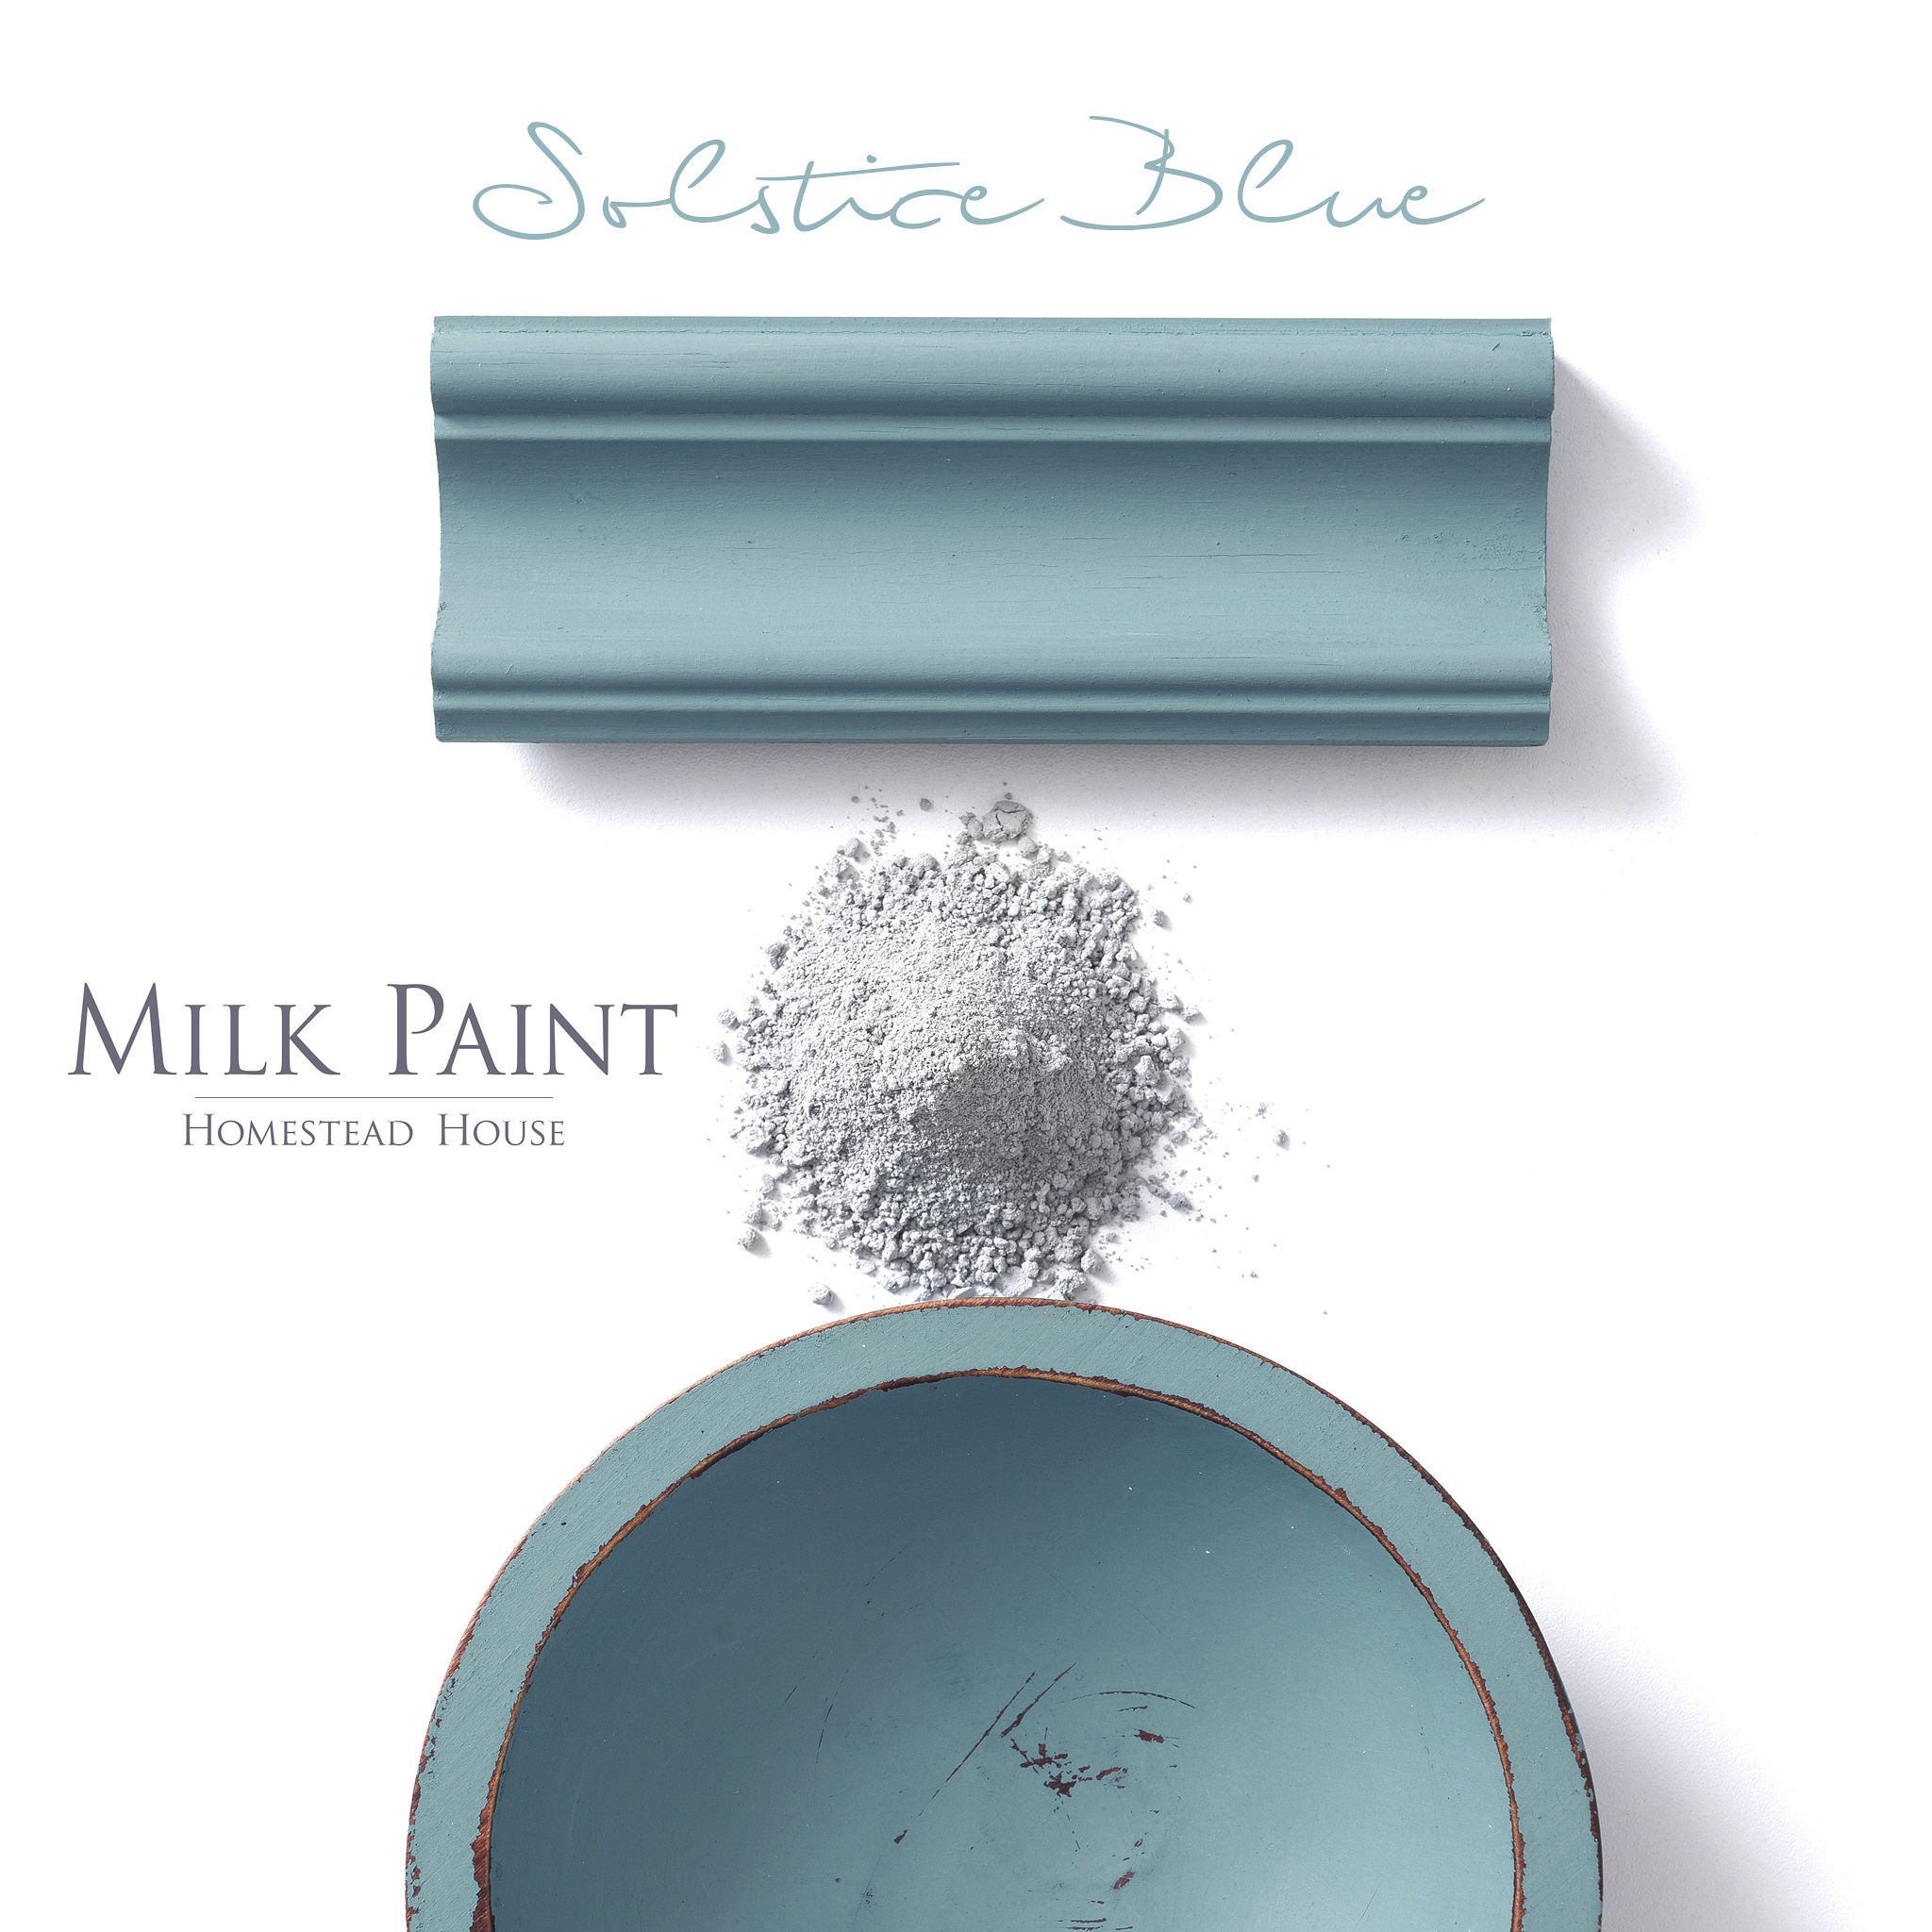 Homestead House - Milk Paint - Solstice Blue